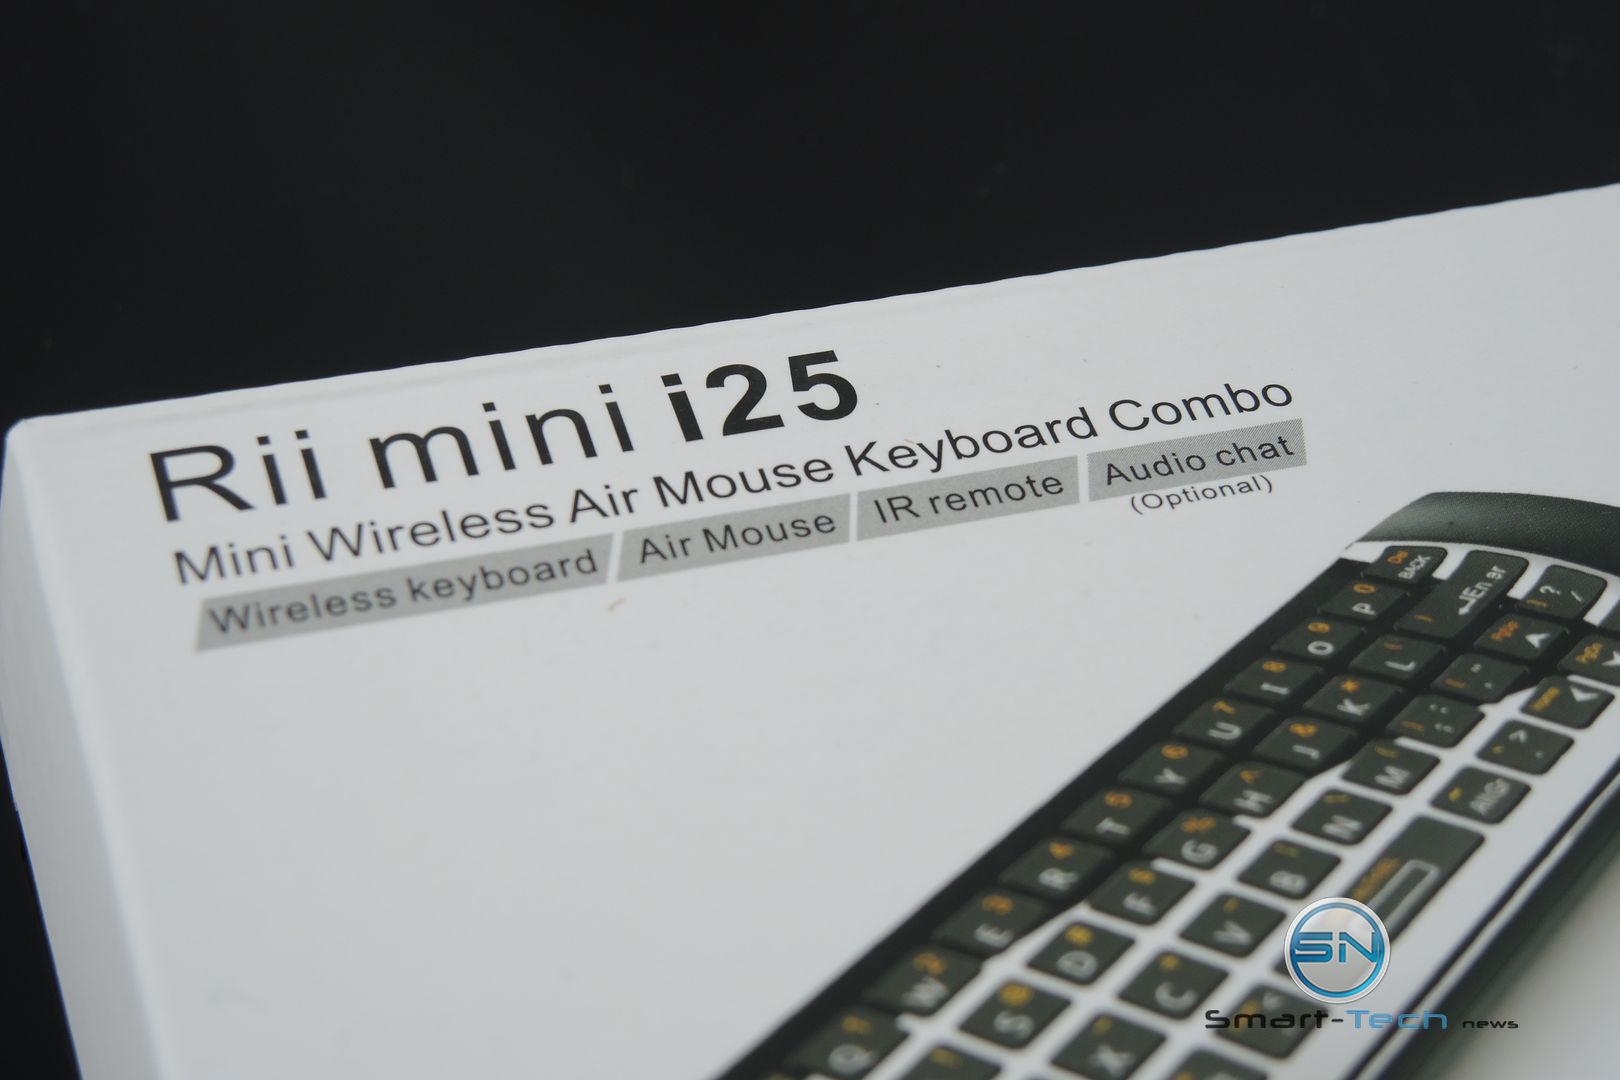 Rii mini i25 Mini Wireless Air Mouse Keyboard Combo